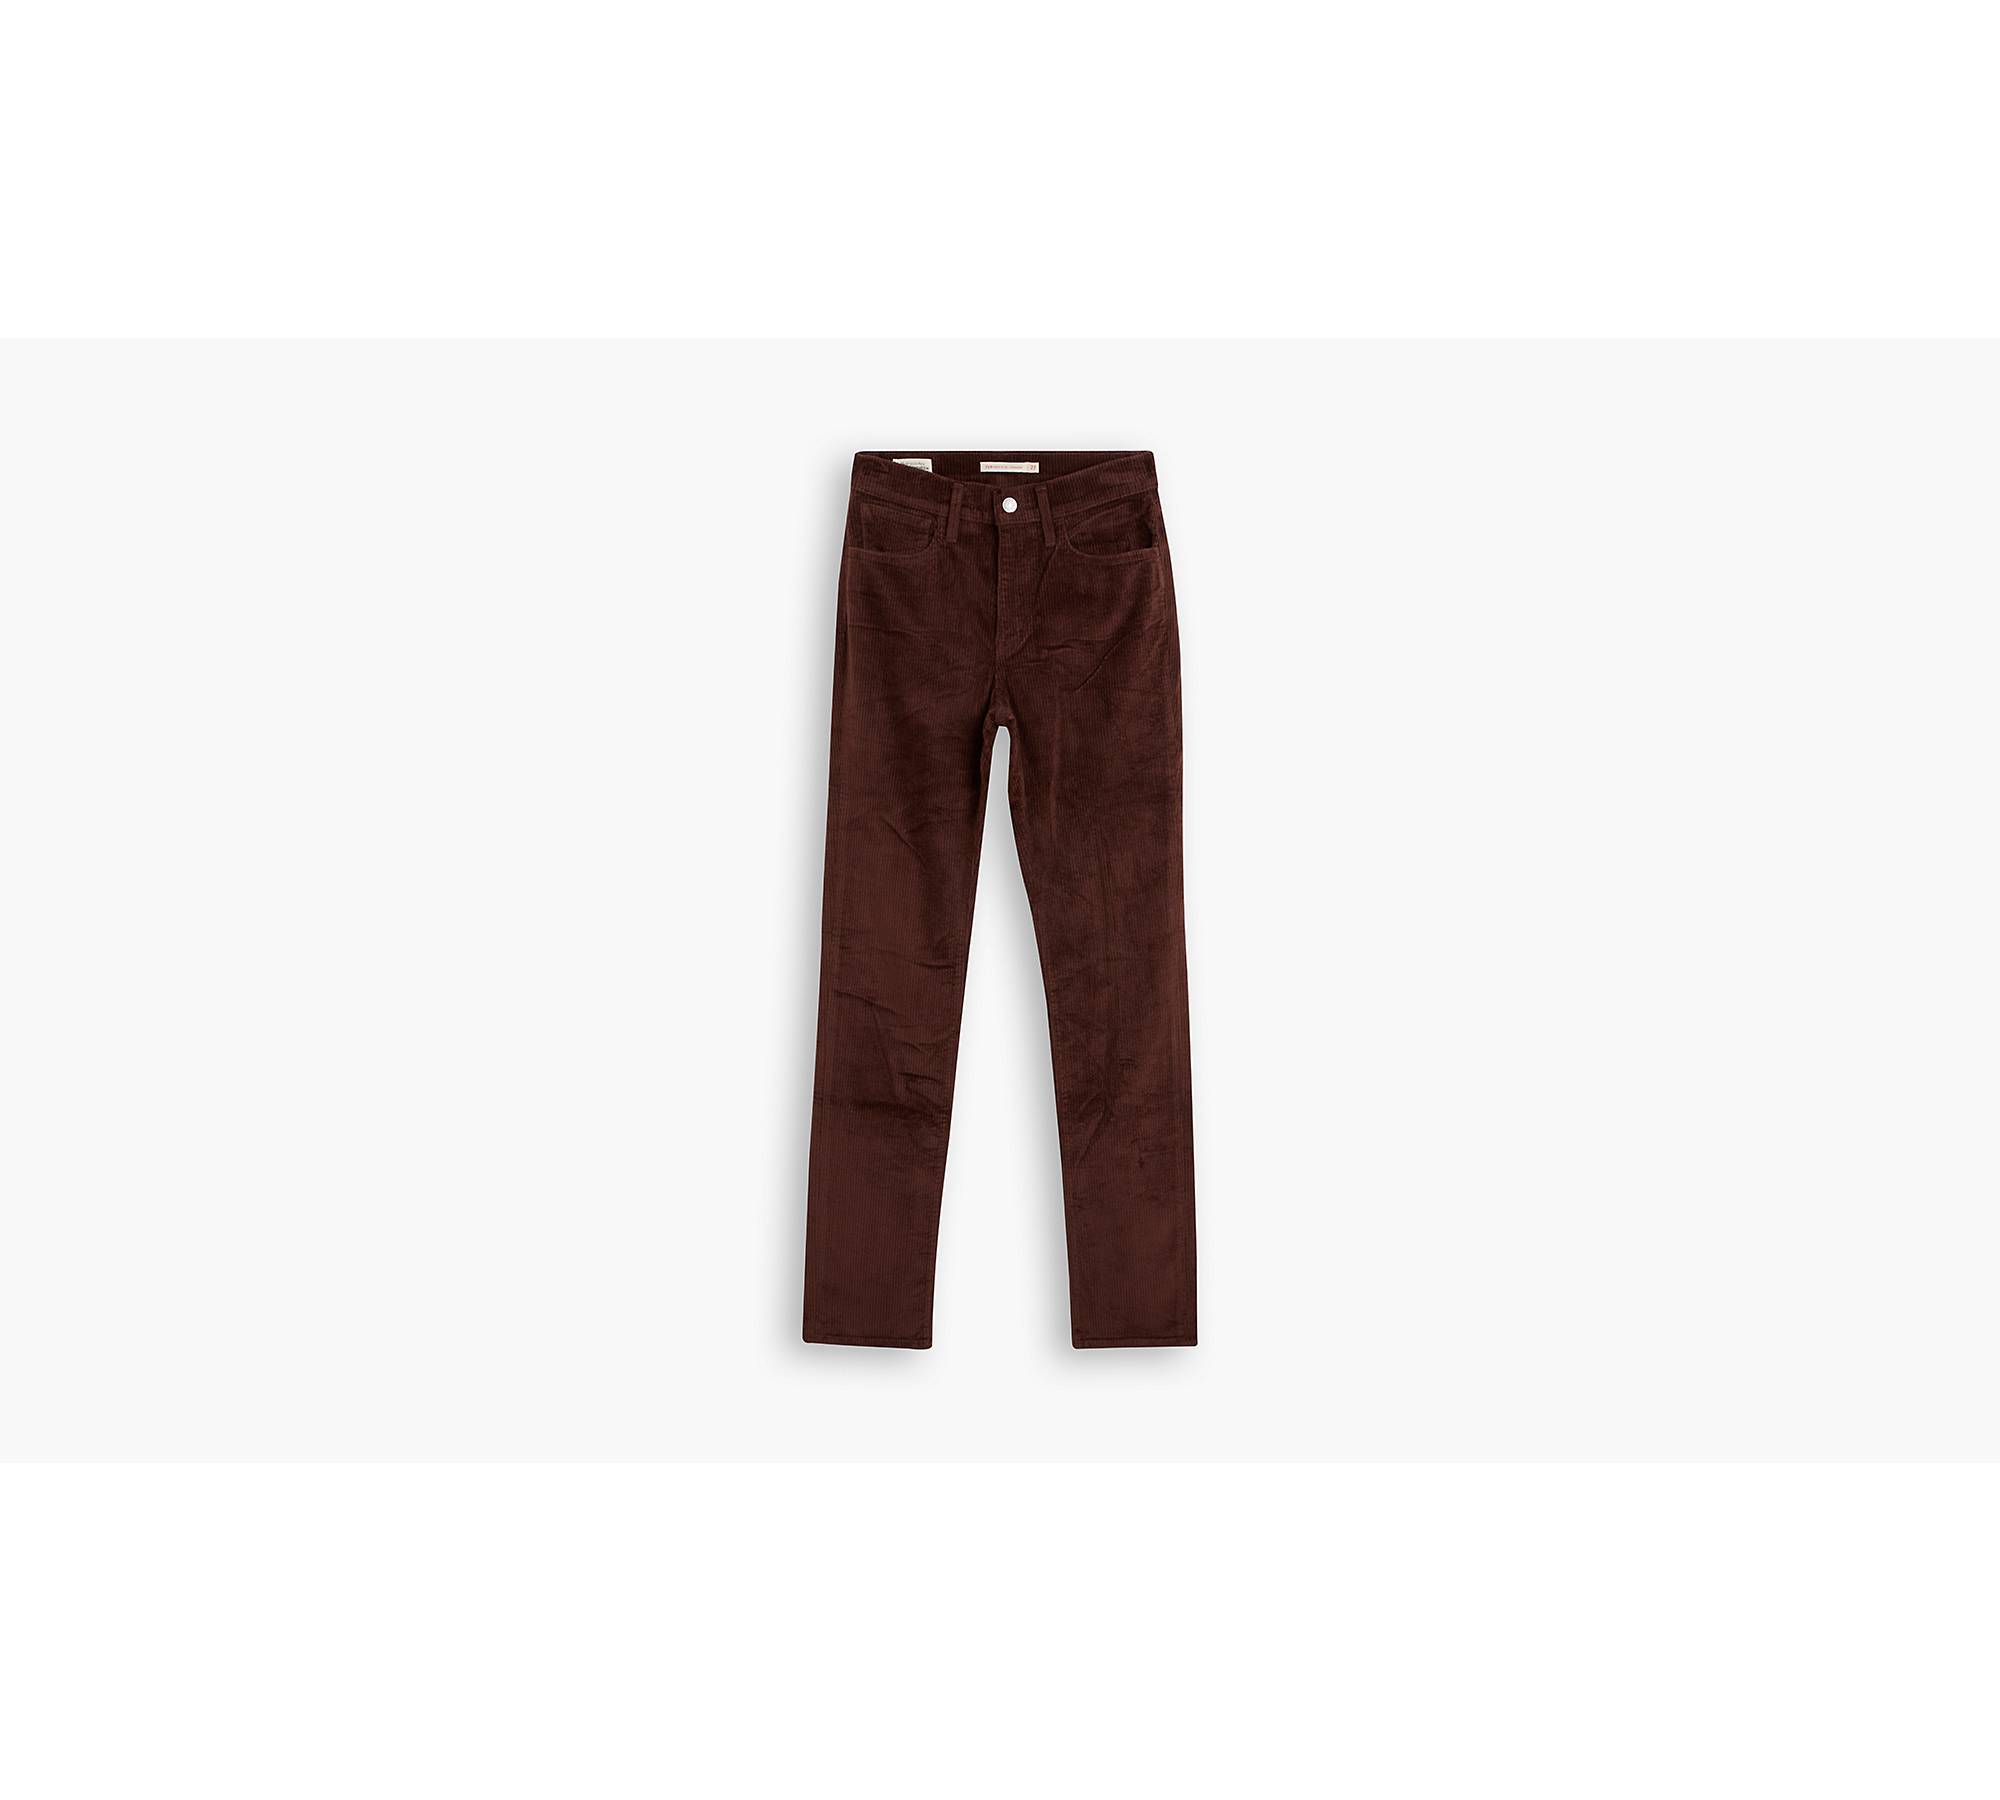 Black Brown 1826 Straight Leg Cotton Corduroy Pants, $98, Lord & Taylor